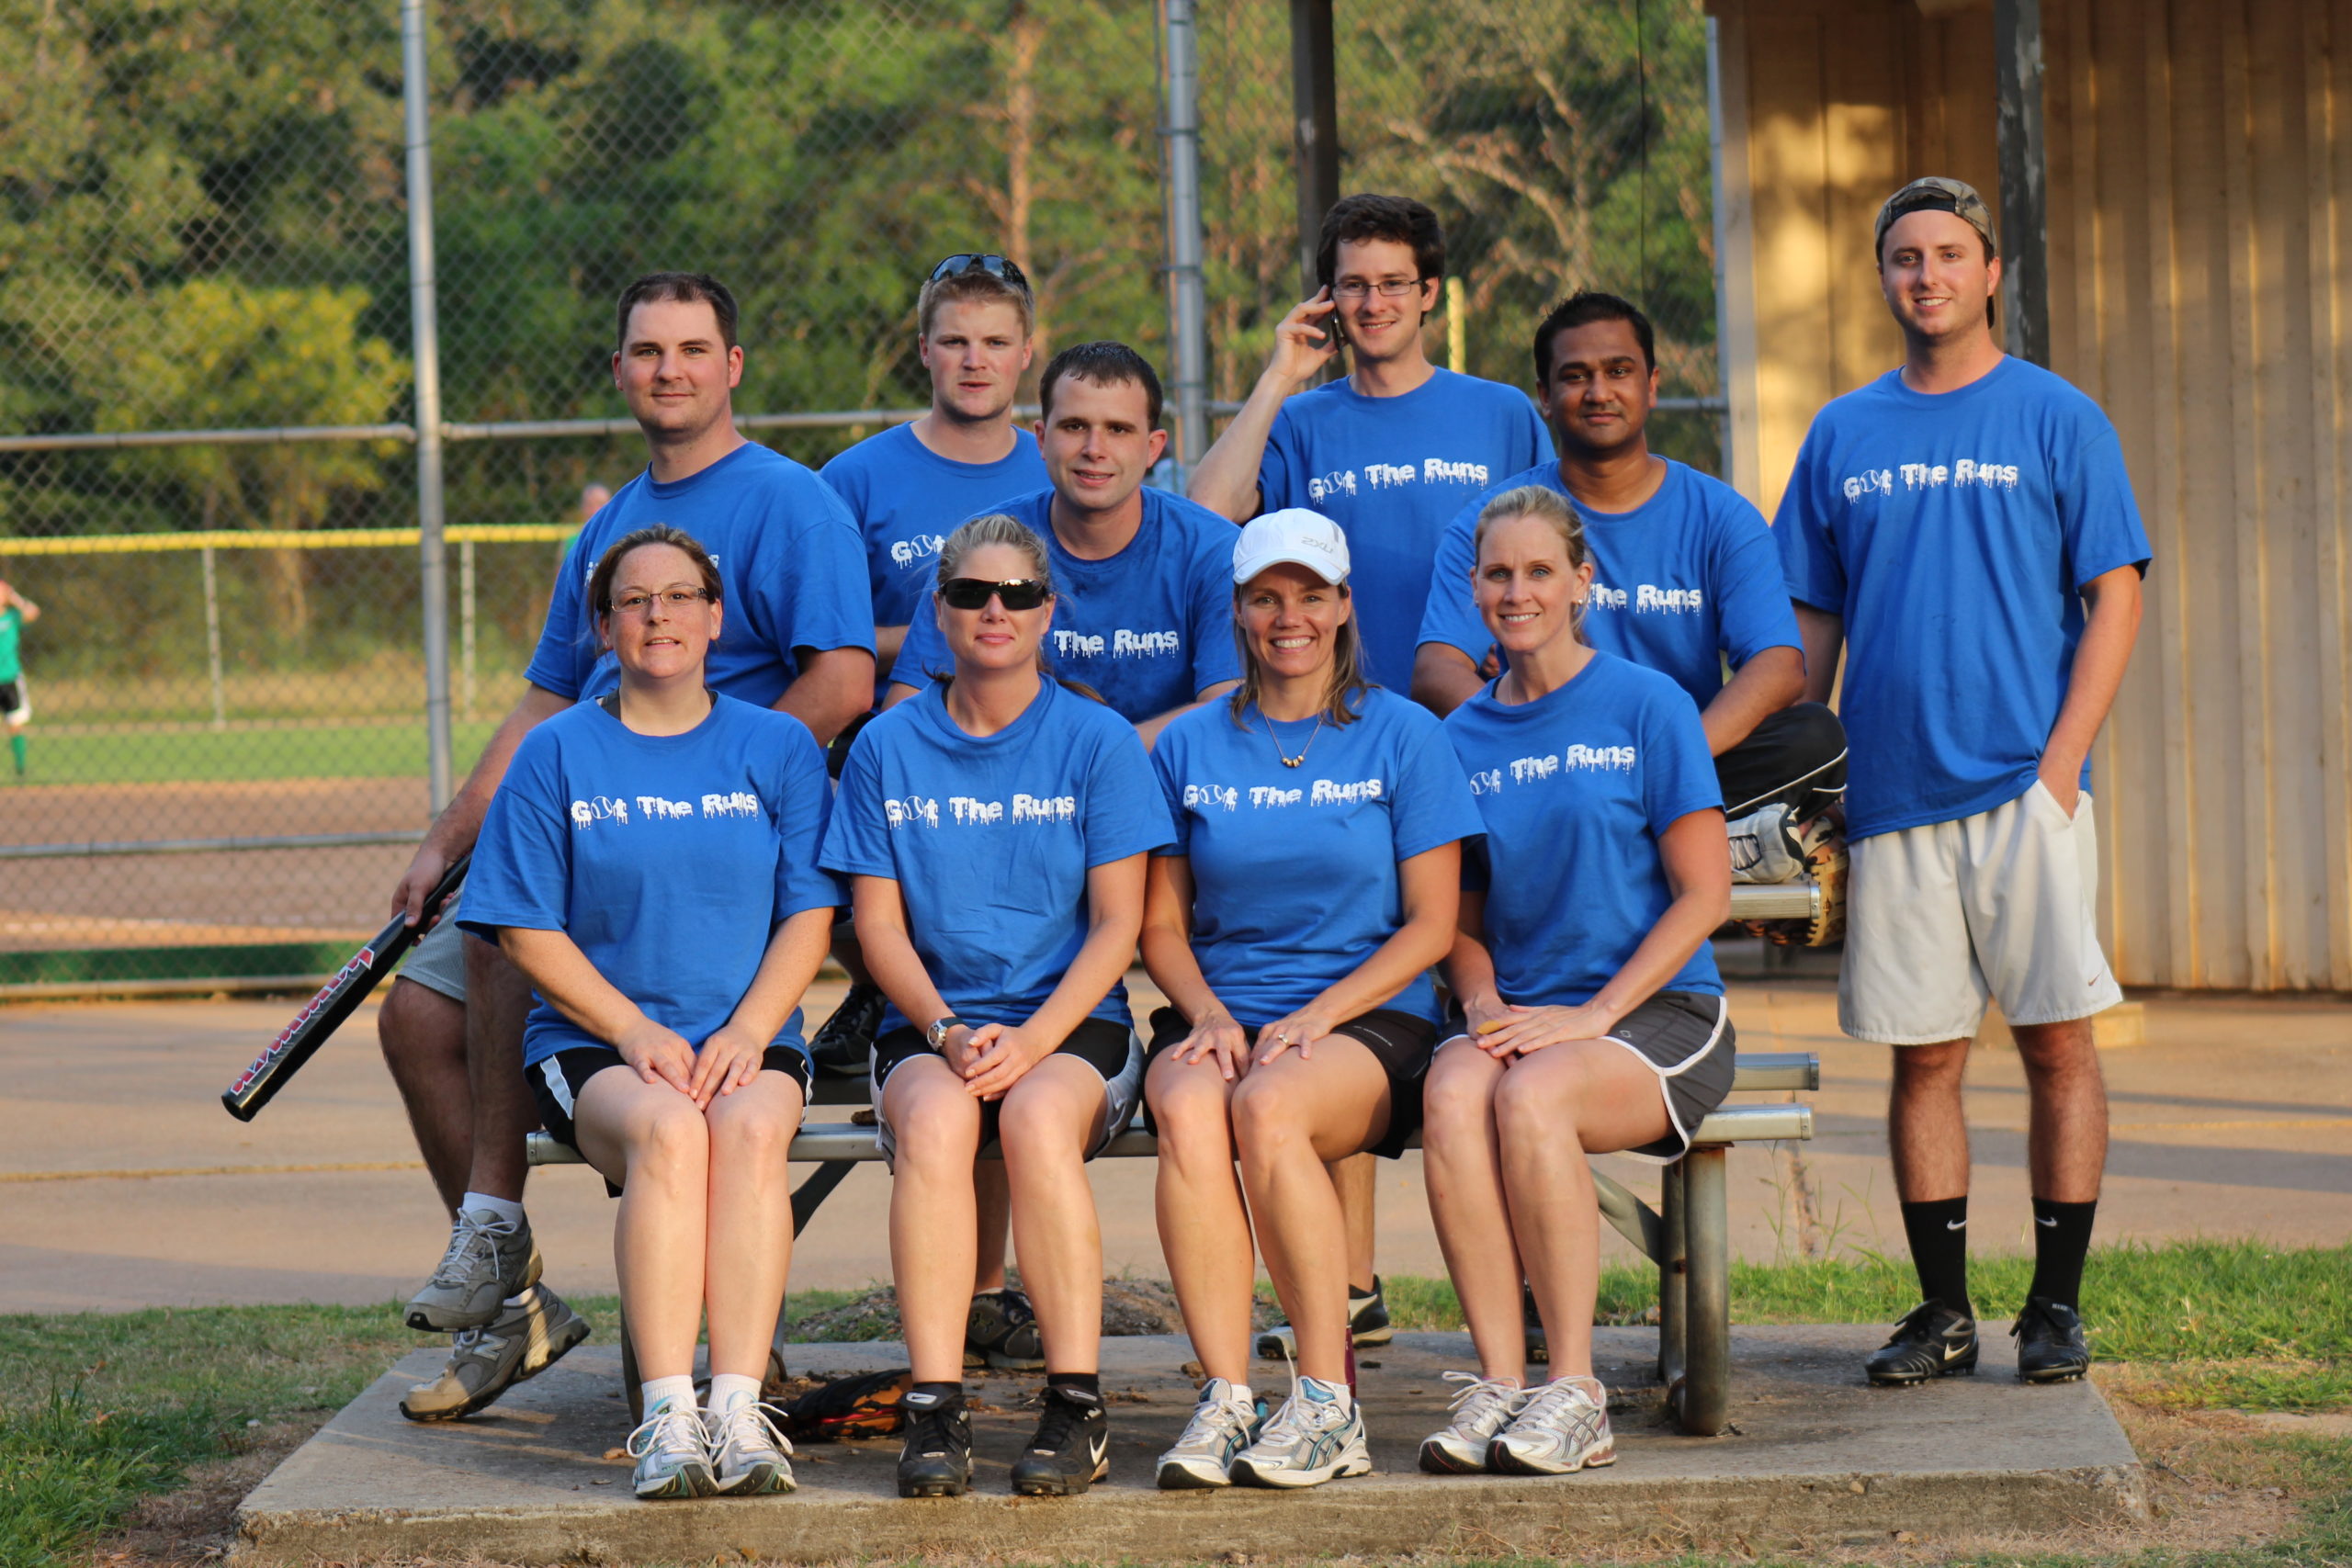 the iOffice softball team